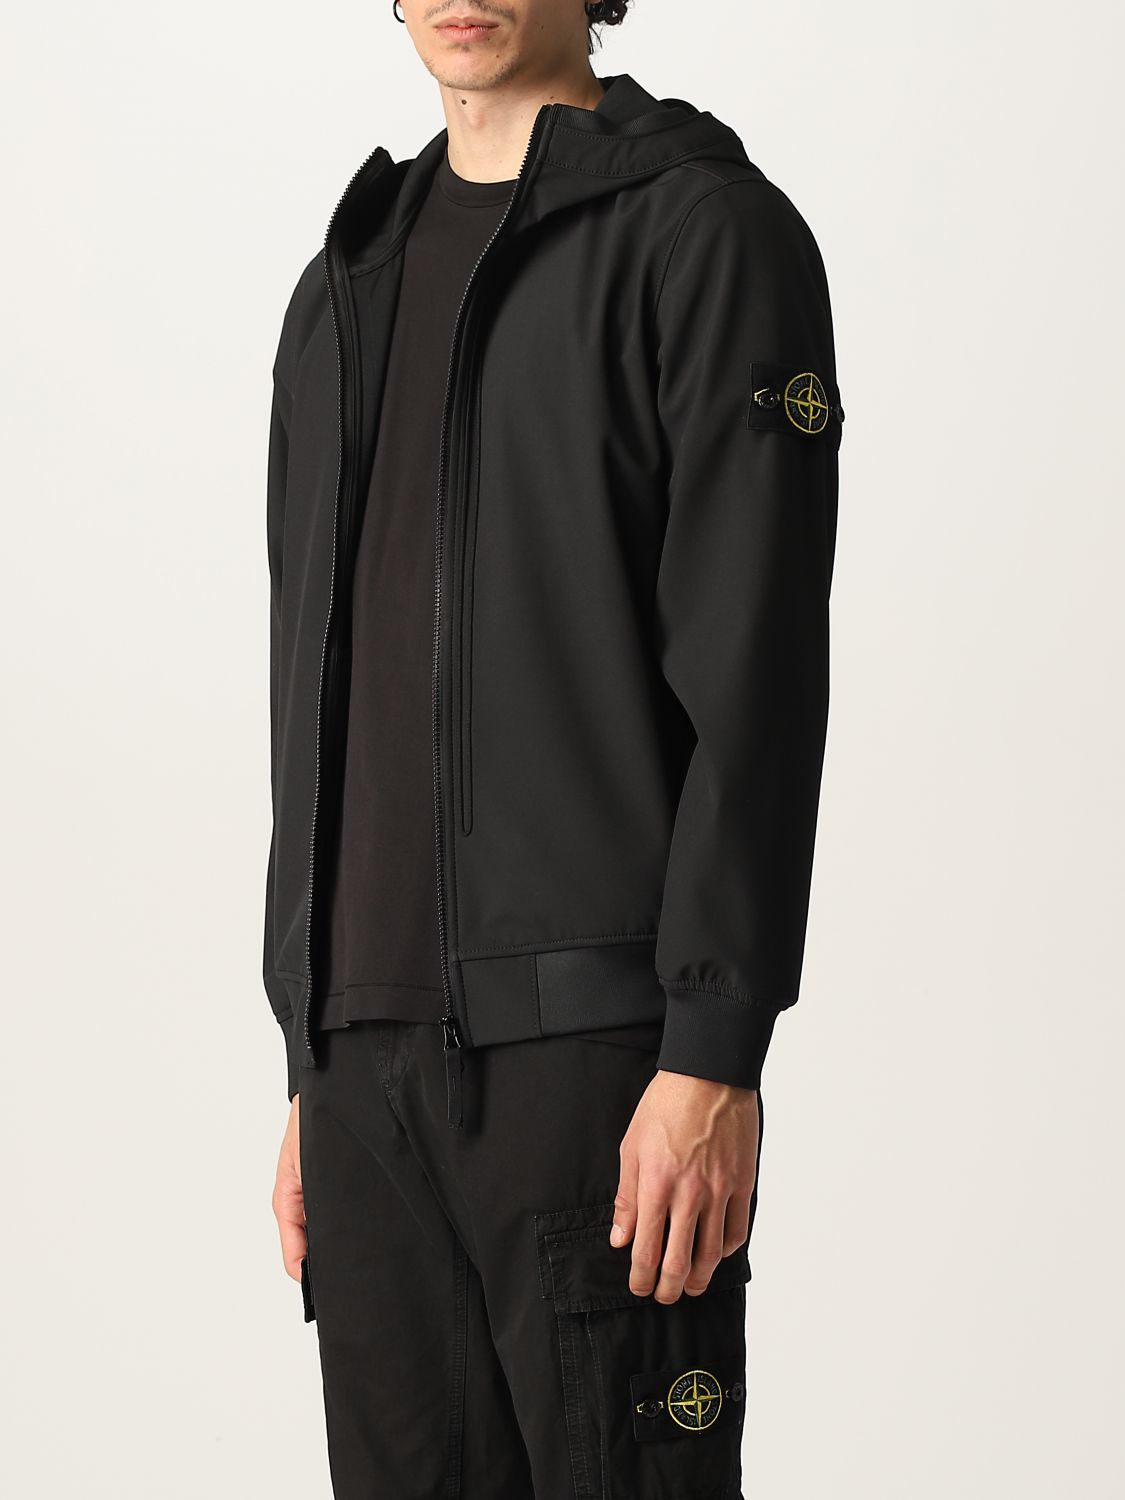 STONE ISLAND: Light Soft Shell-r_e.dye® technology jacket - Black 